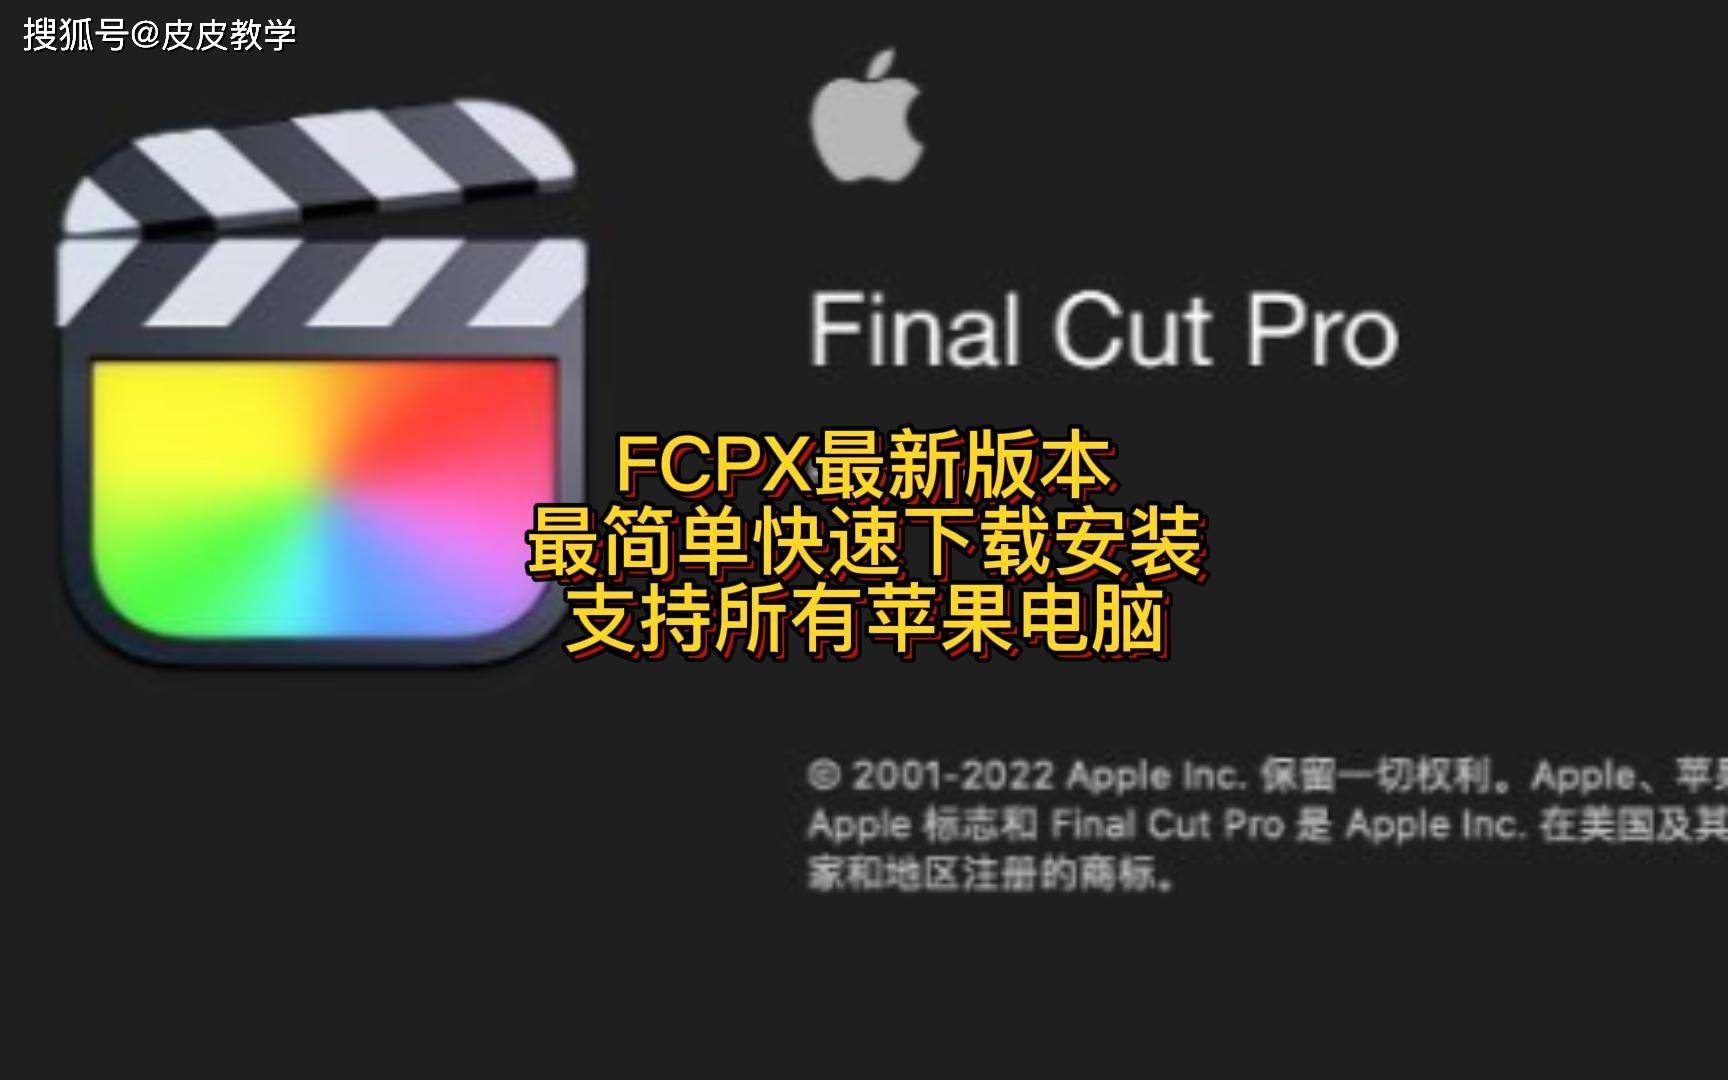 Final Cut Pro X10.6.3Mac版下载安装官方正版激活永久使用